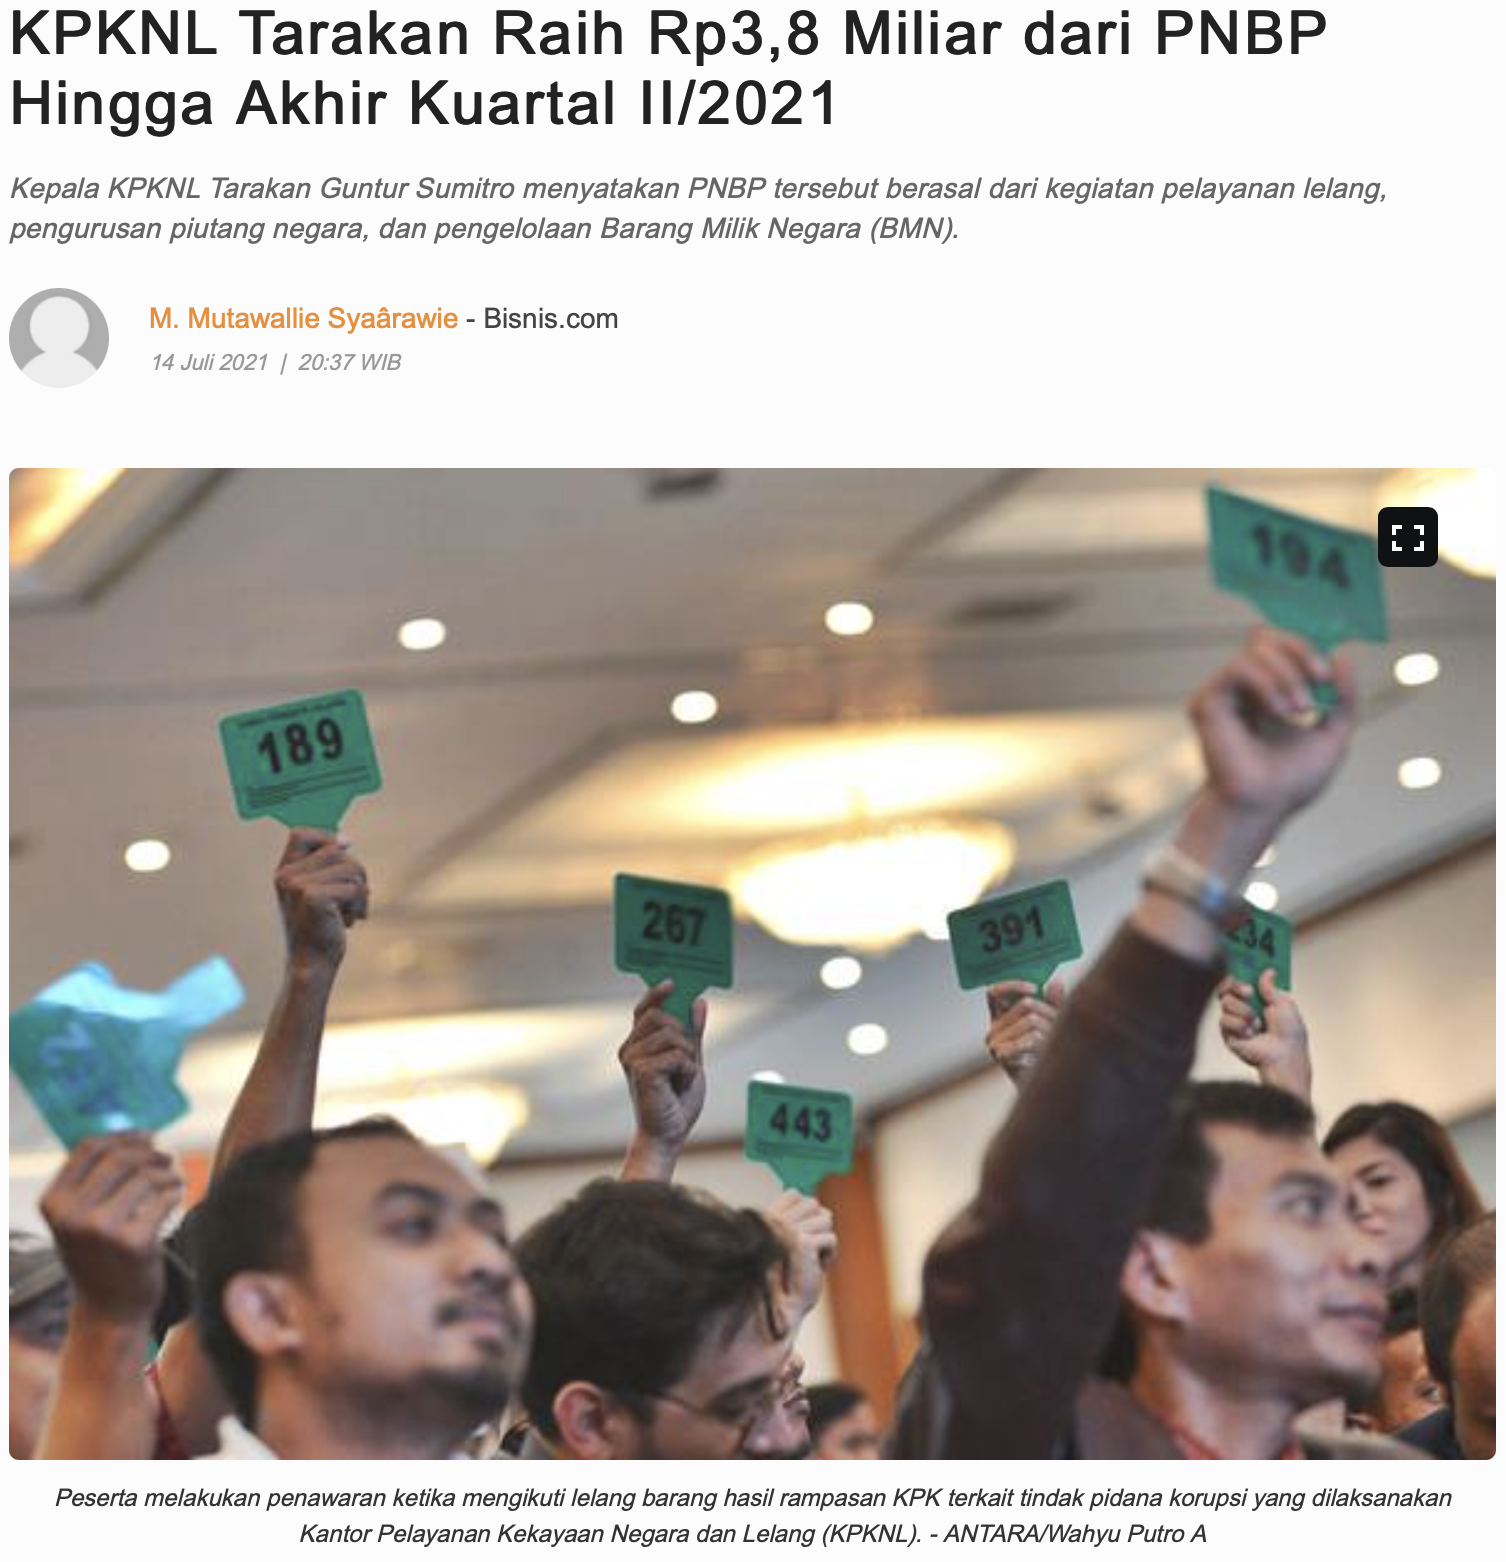 KPKNL Tarakan Raih Rp3,8 Miliar dari PNBP Hingga Akhir Kuartal II/2021